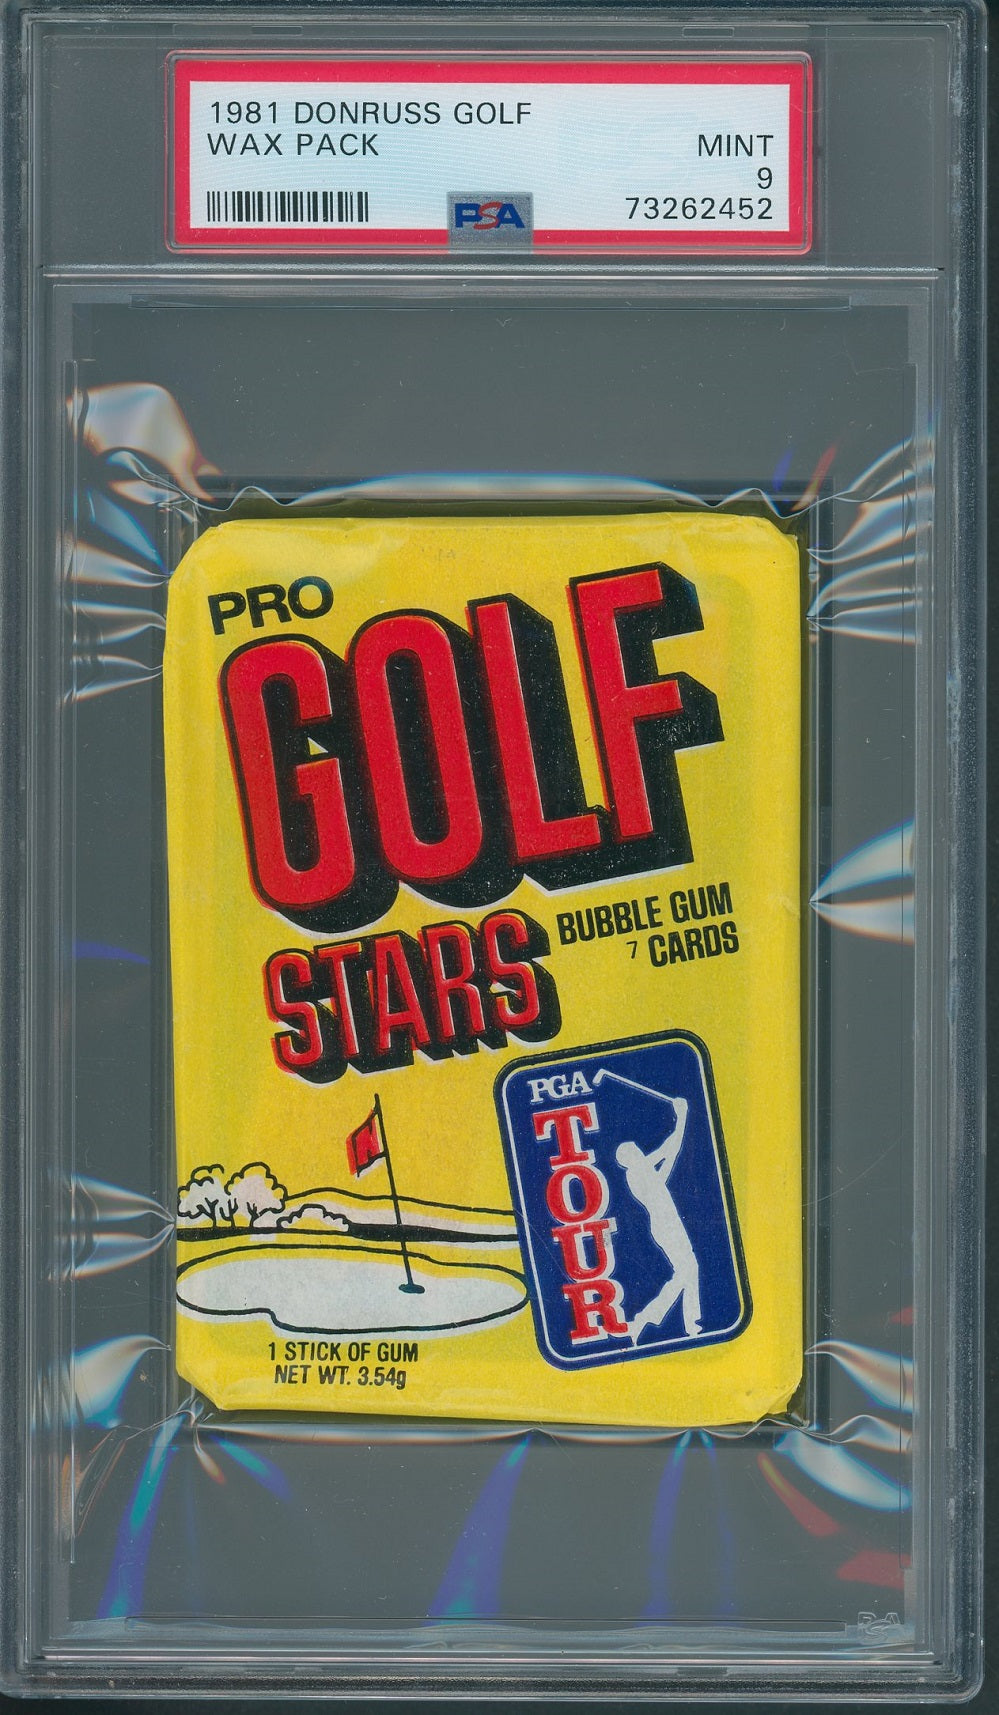 1981 Donruss Pro Golf Stars Unopened Wax Pack PSA 9